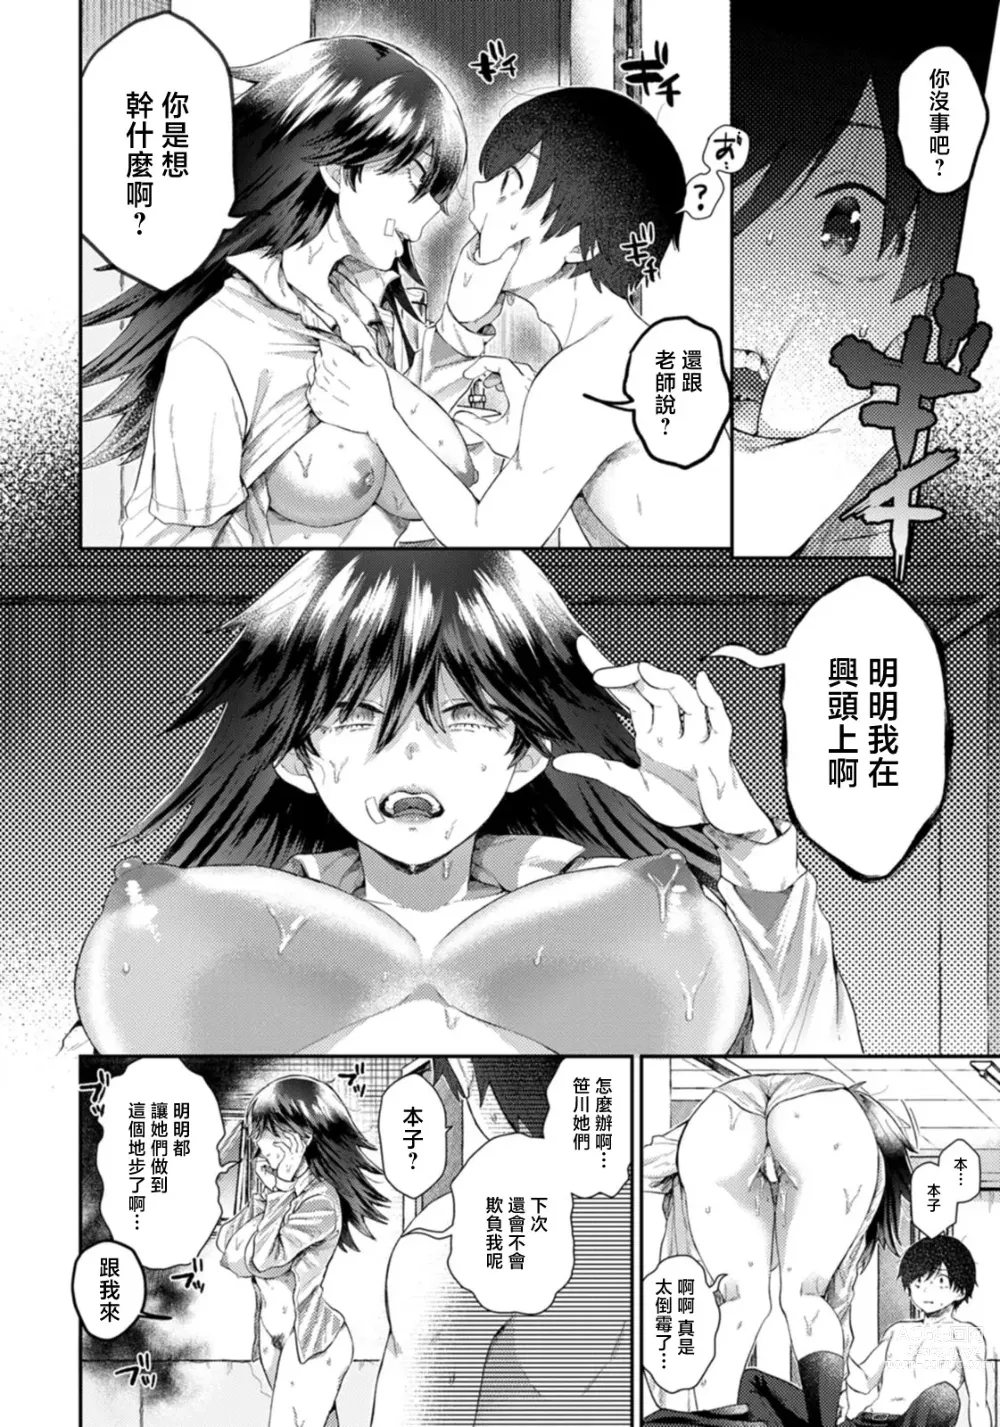 Page 4 of manga Mishiranu Osananajimi